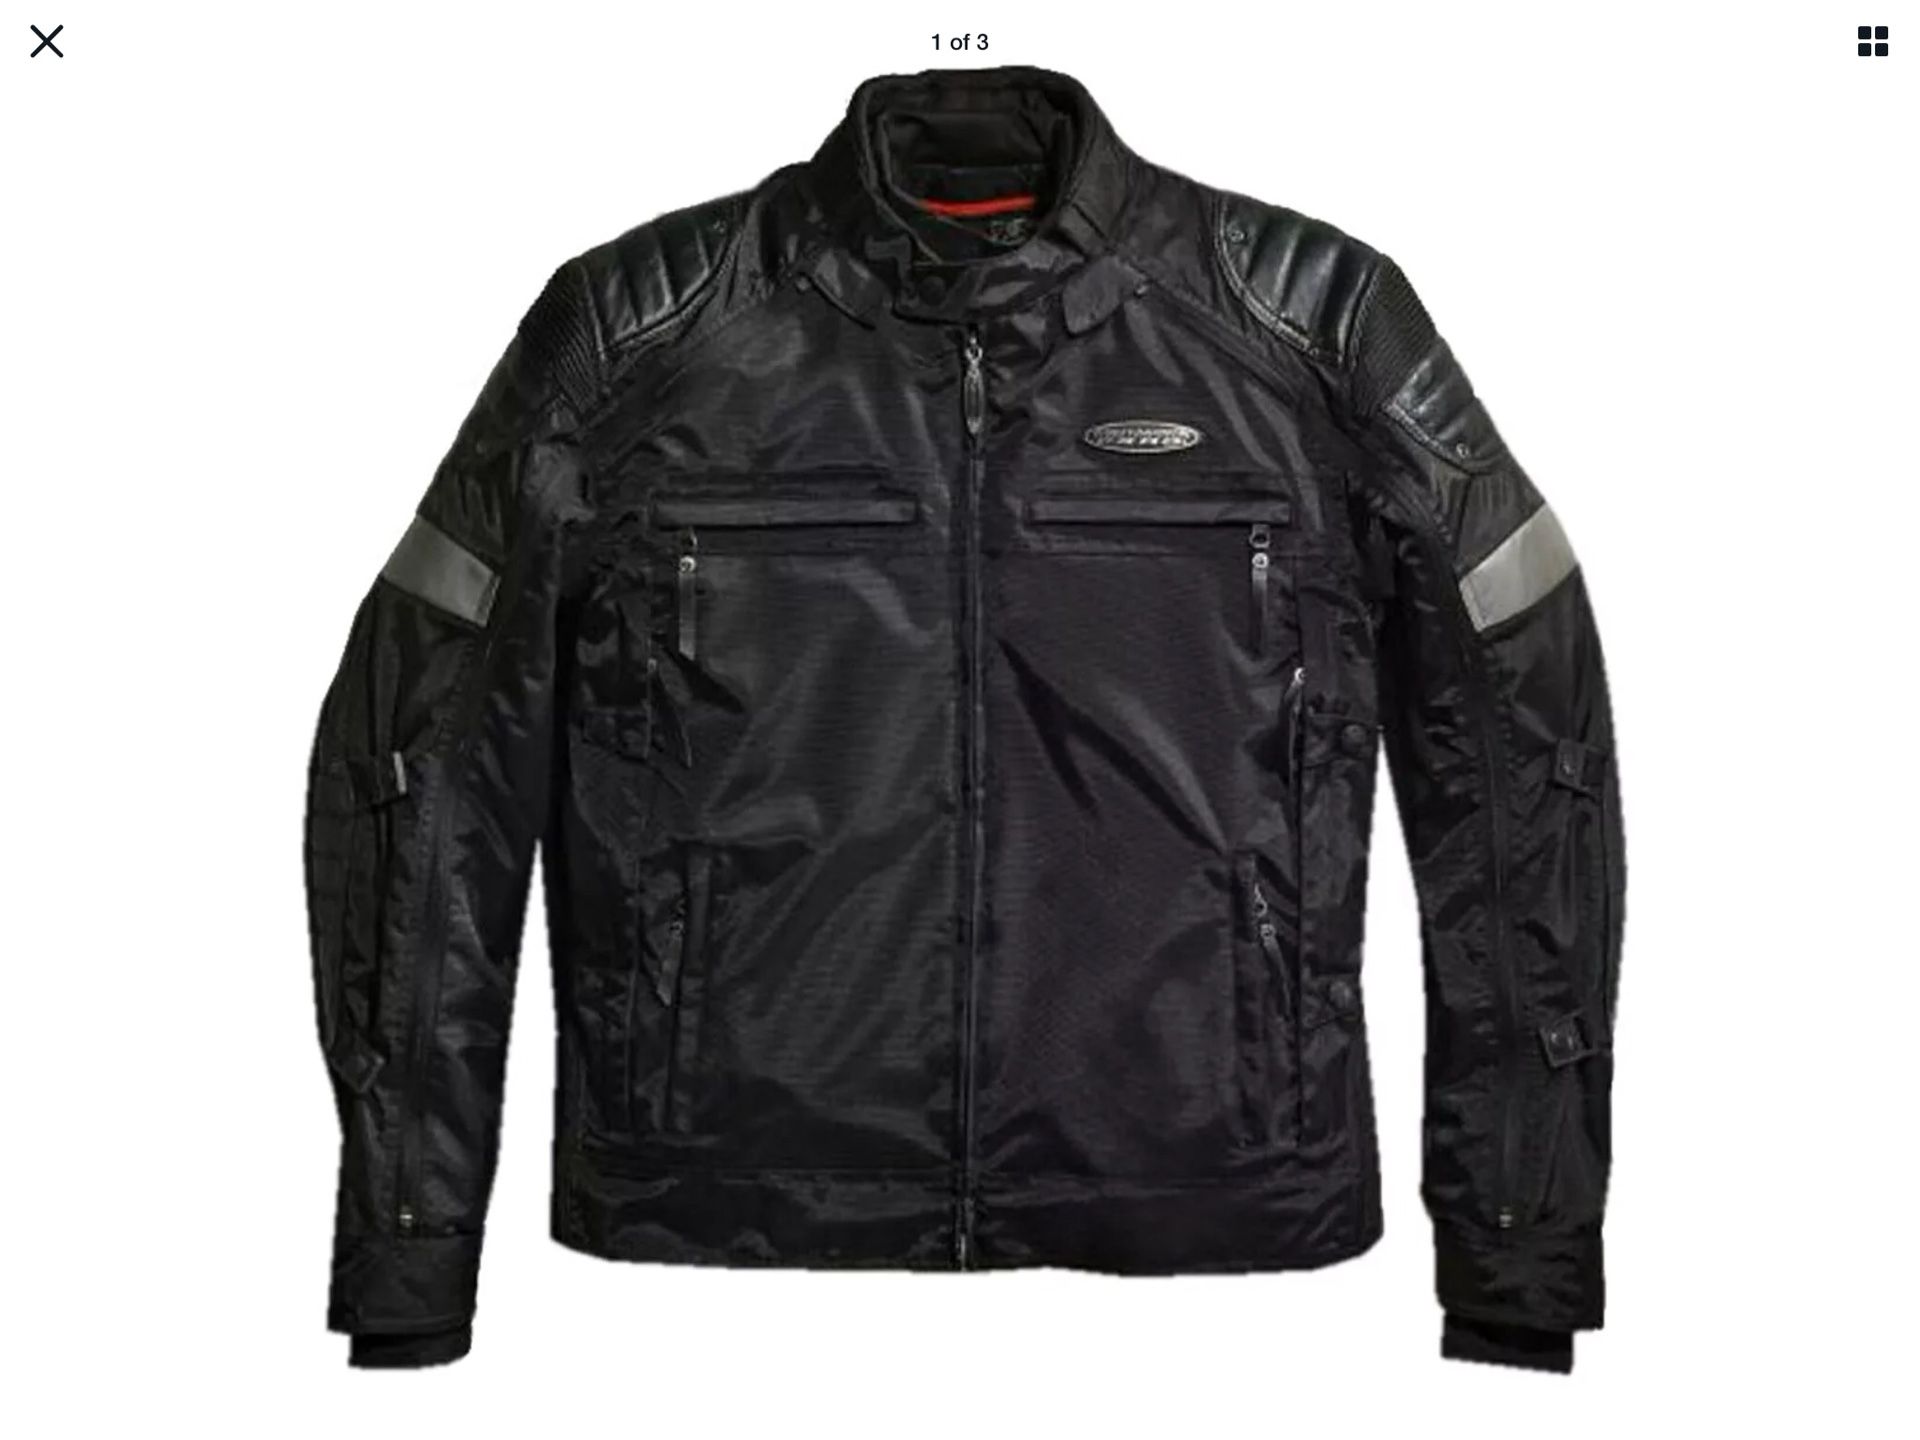 FXRG Harley Davidson Jacket ( not the Leather version) Size Large